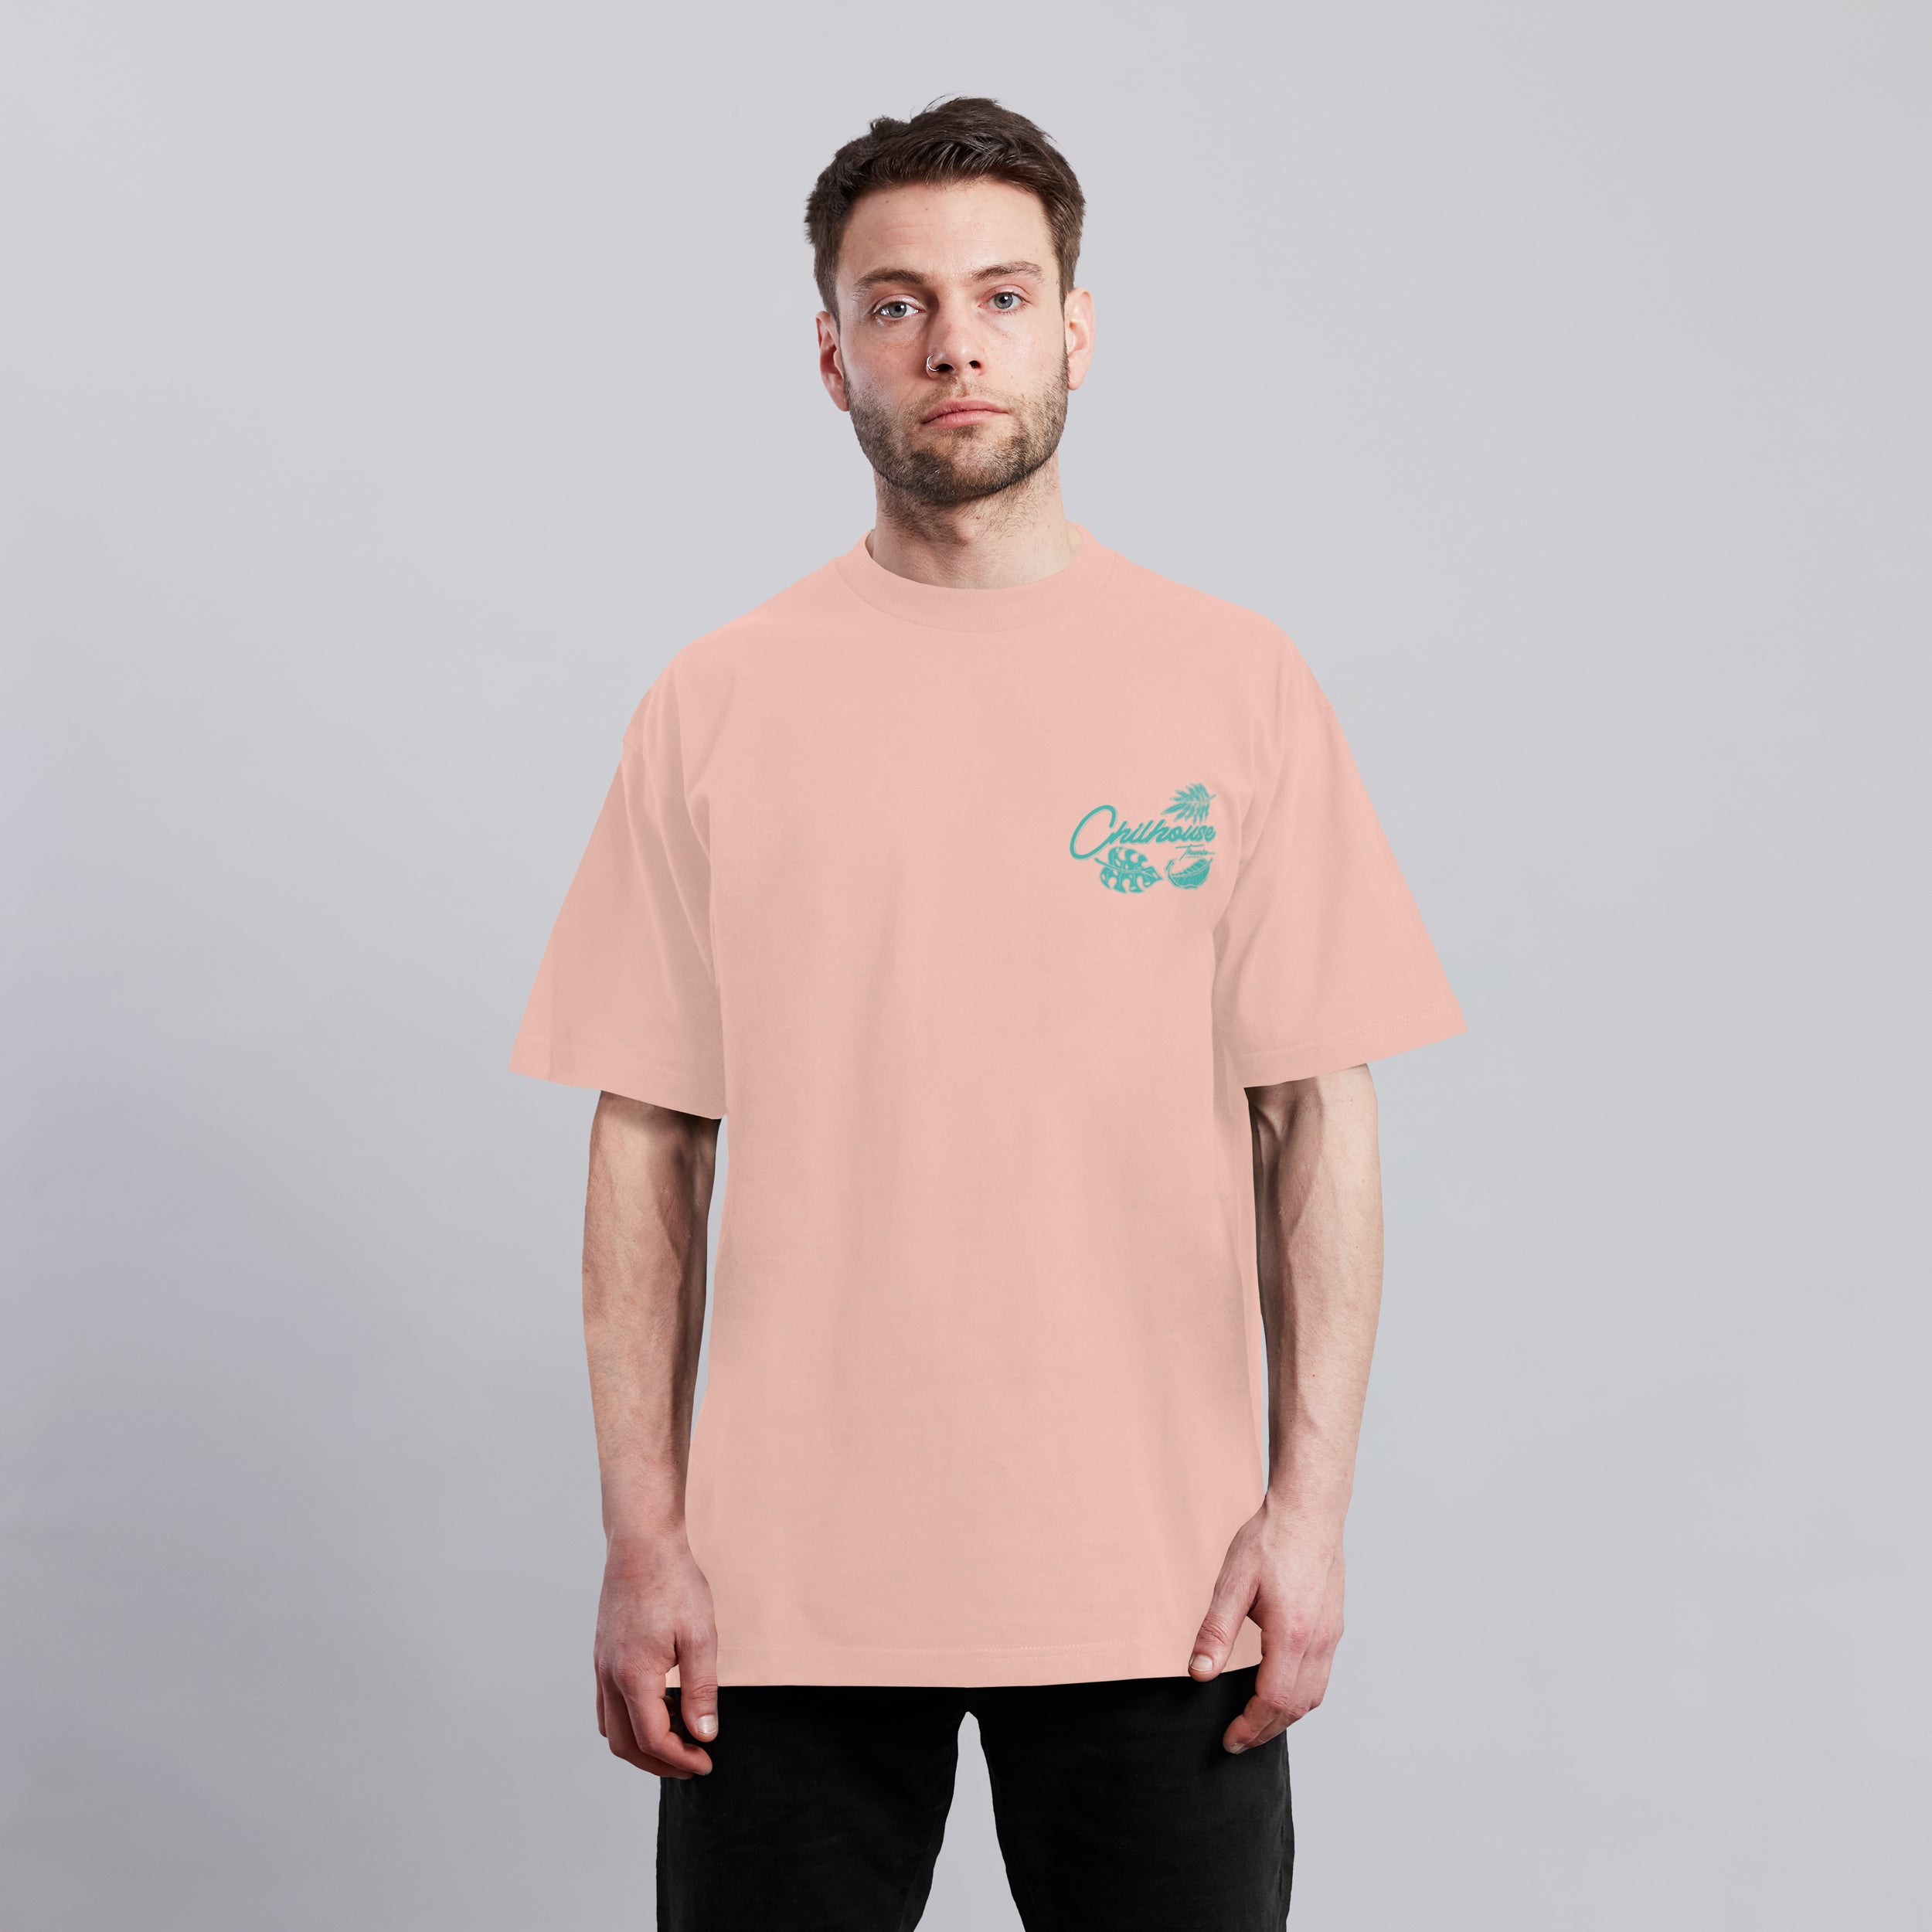 Chilhouse V2 Pale Pink T-Shirt